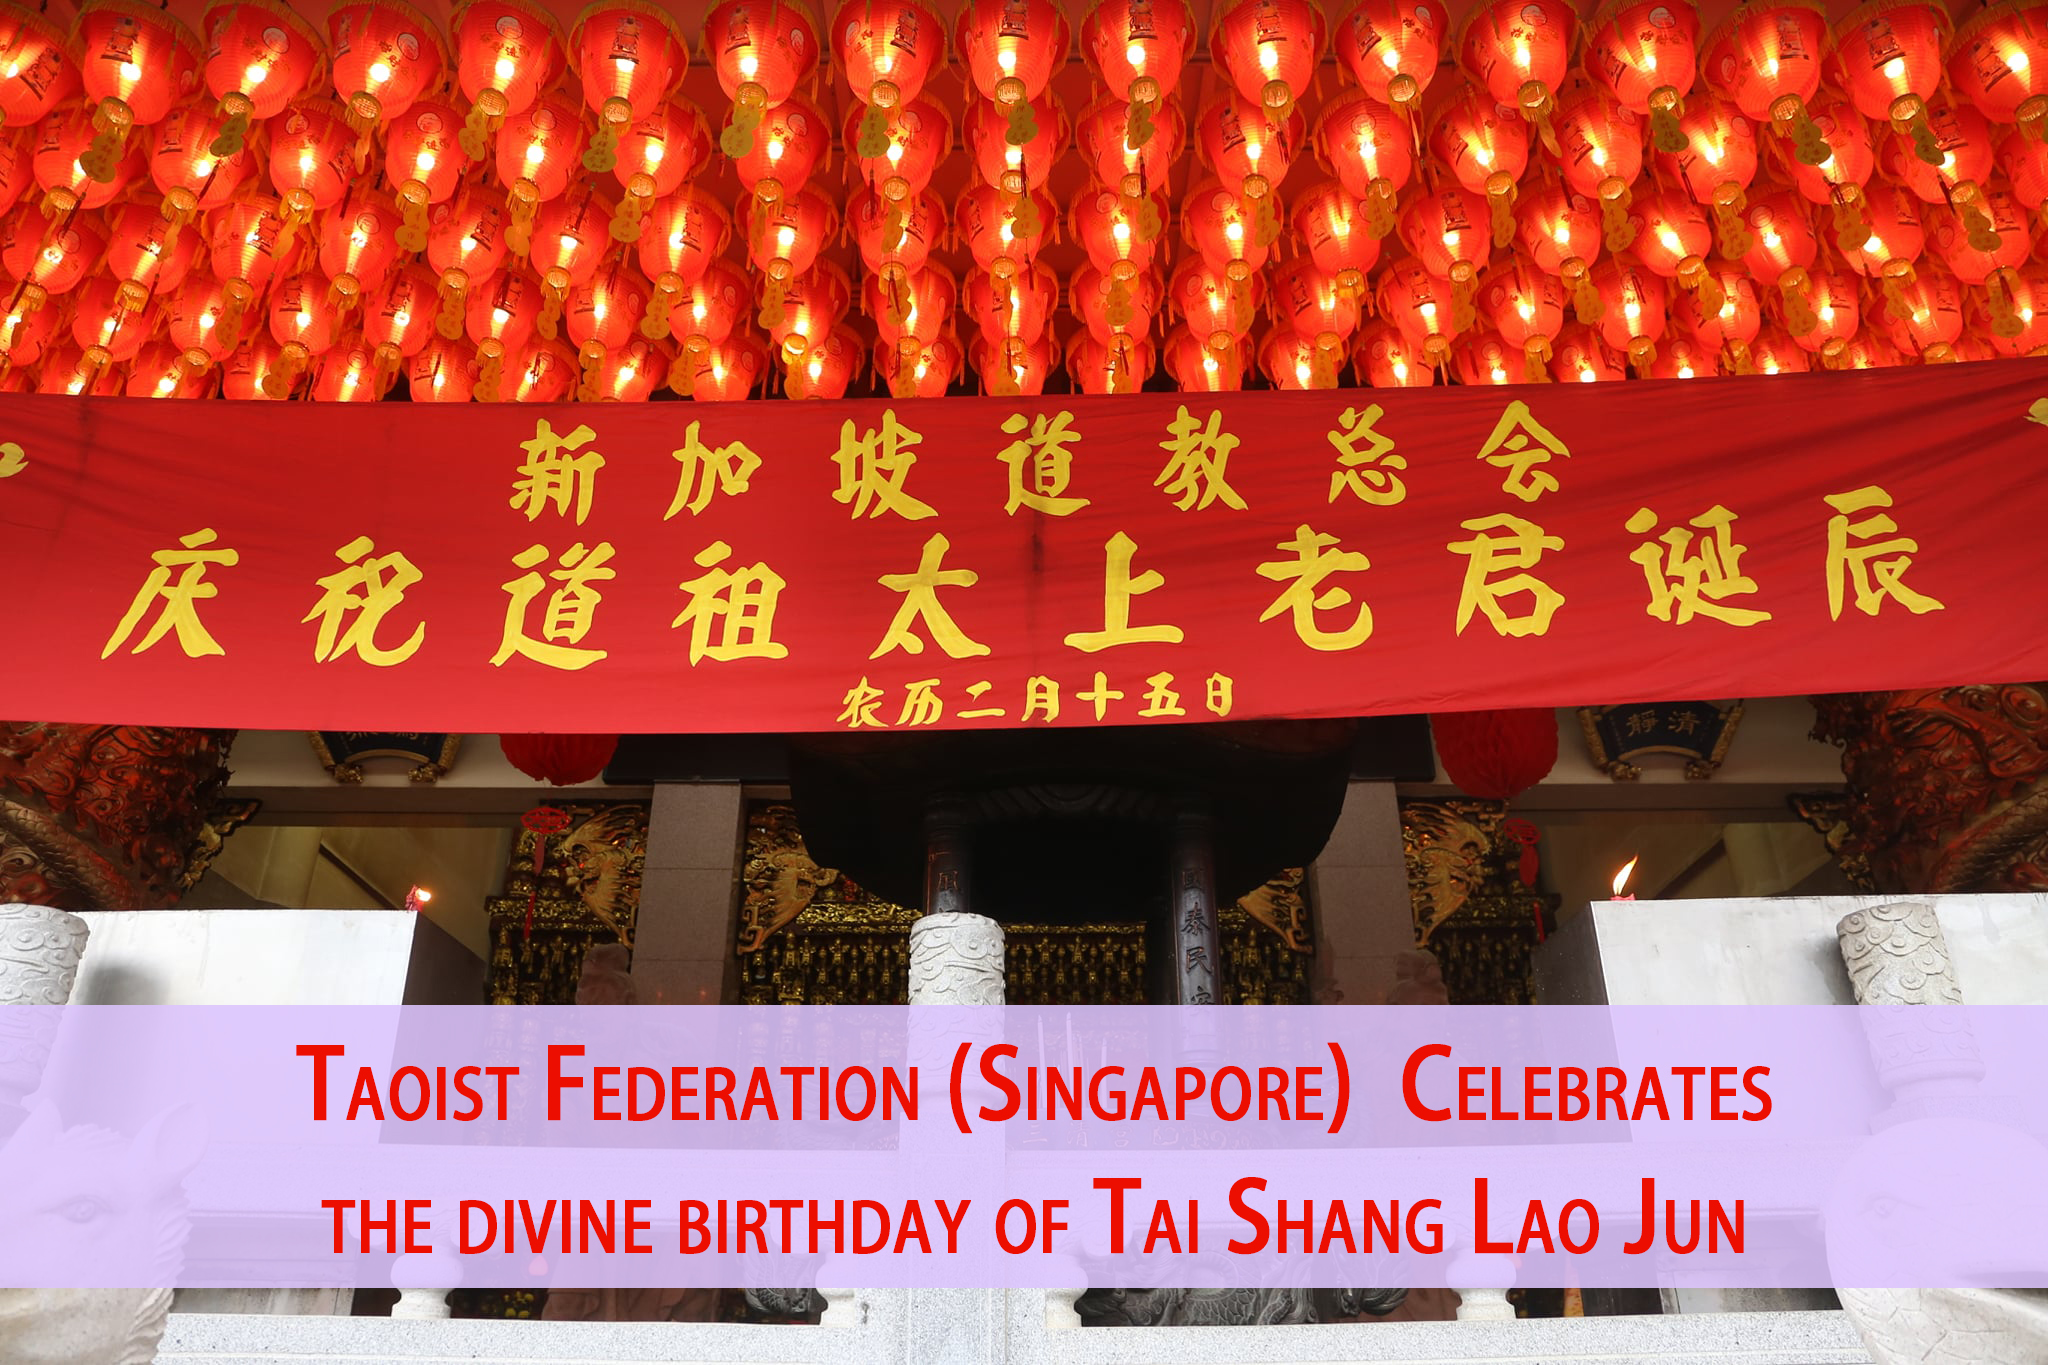 Taoist Federation (Singapore) Celebrates the divine birthday of Tai Shang Lao Jun